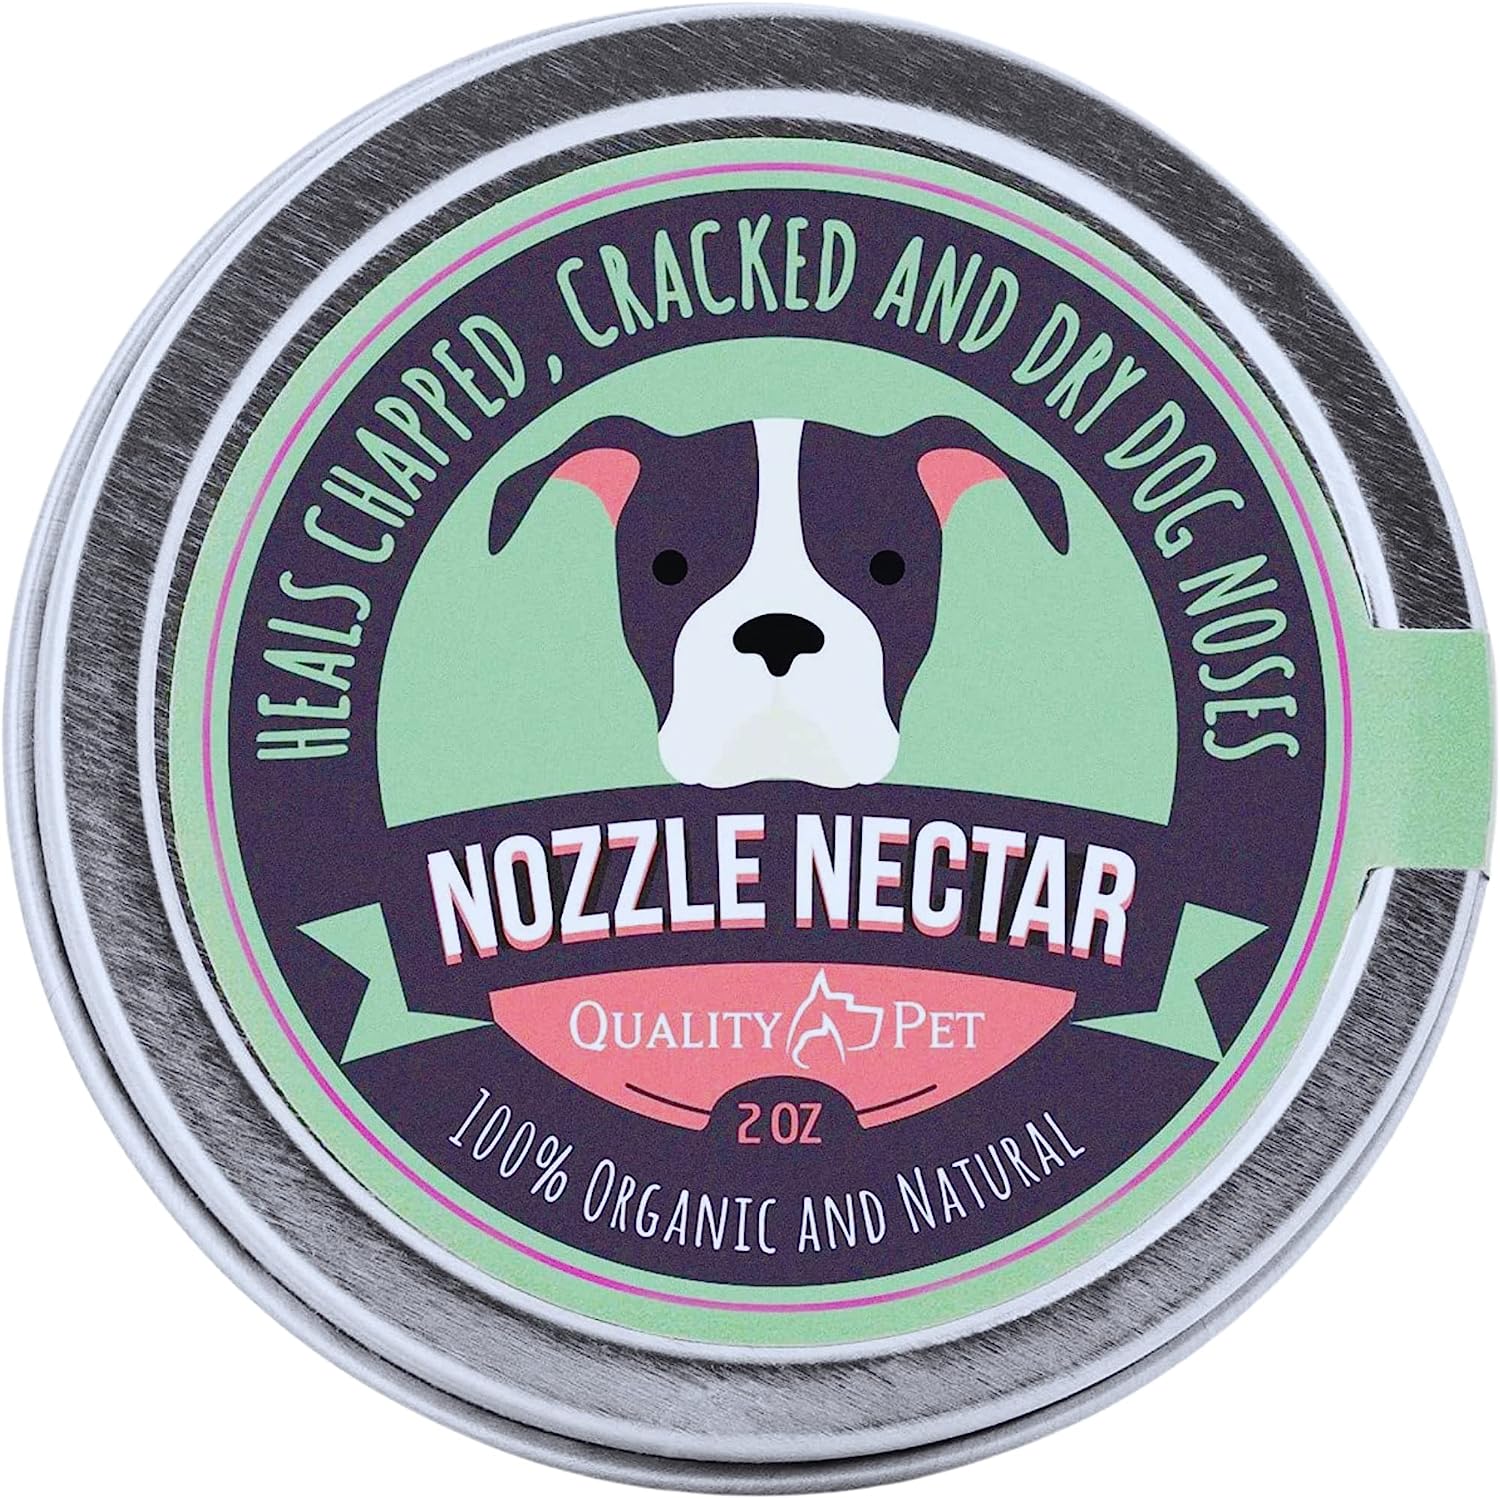 2. Baume nasal pour chien Nozzle Nectar